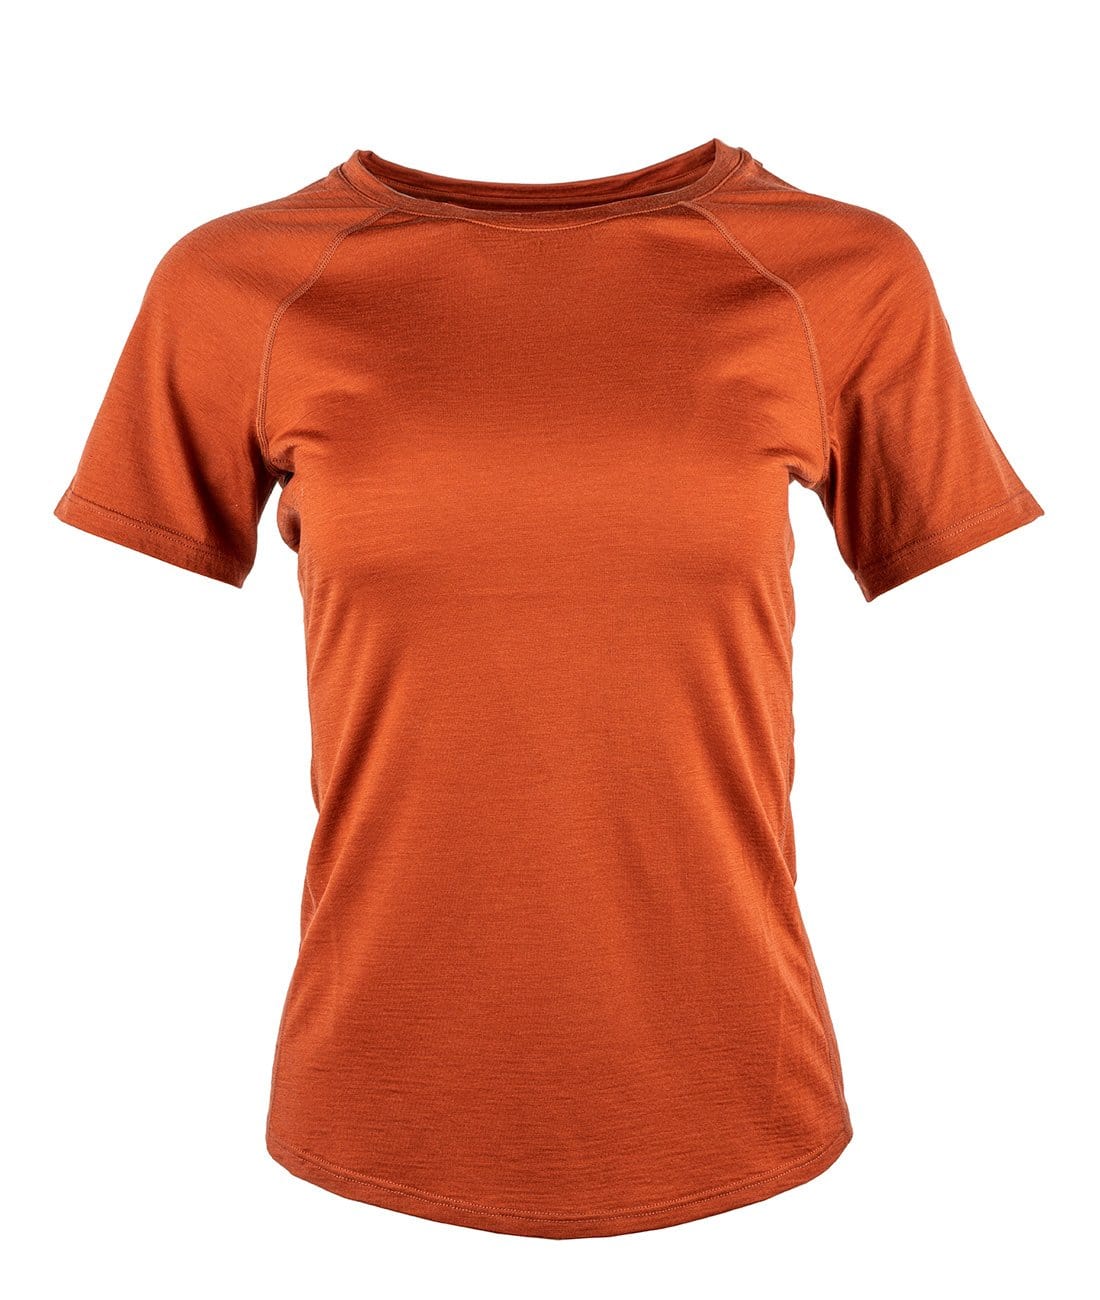 Women's Apex Merino Tech T-Shirt